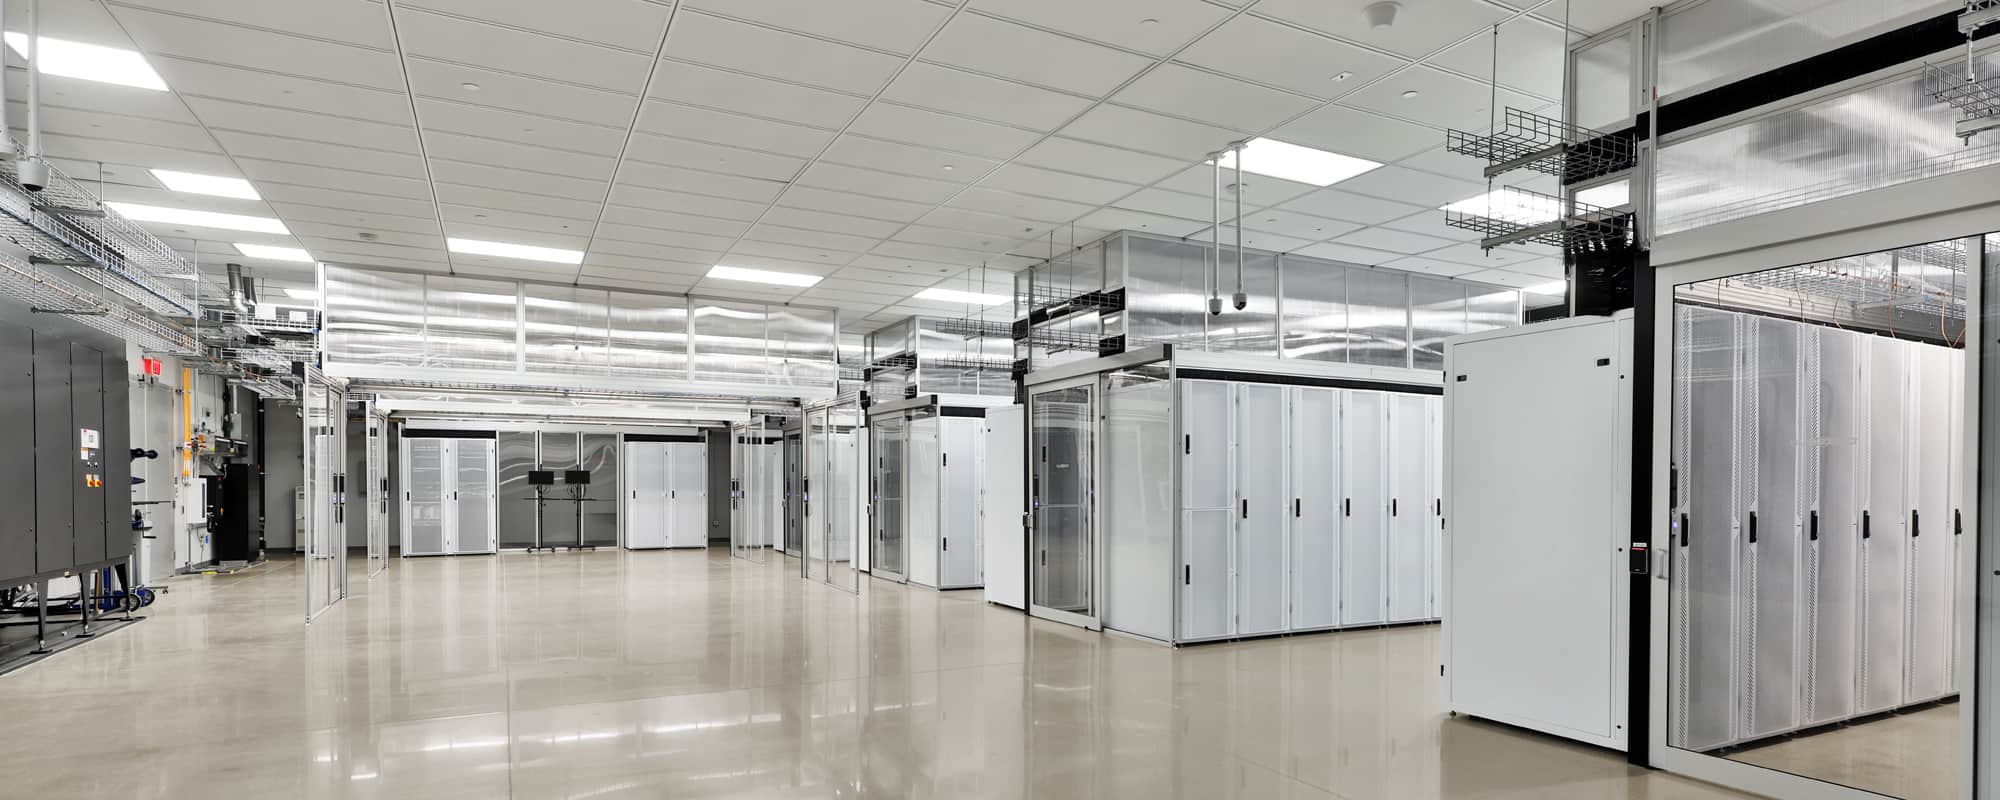 Greenville data center server cabinets